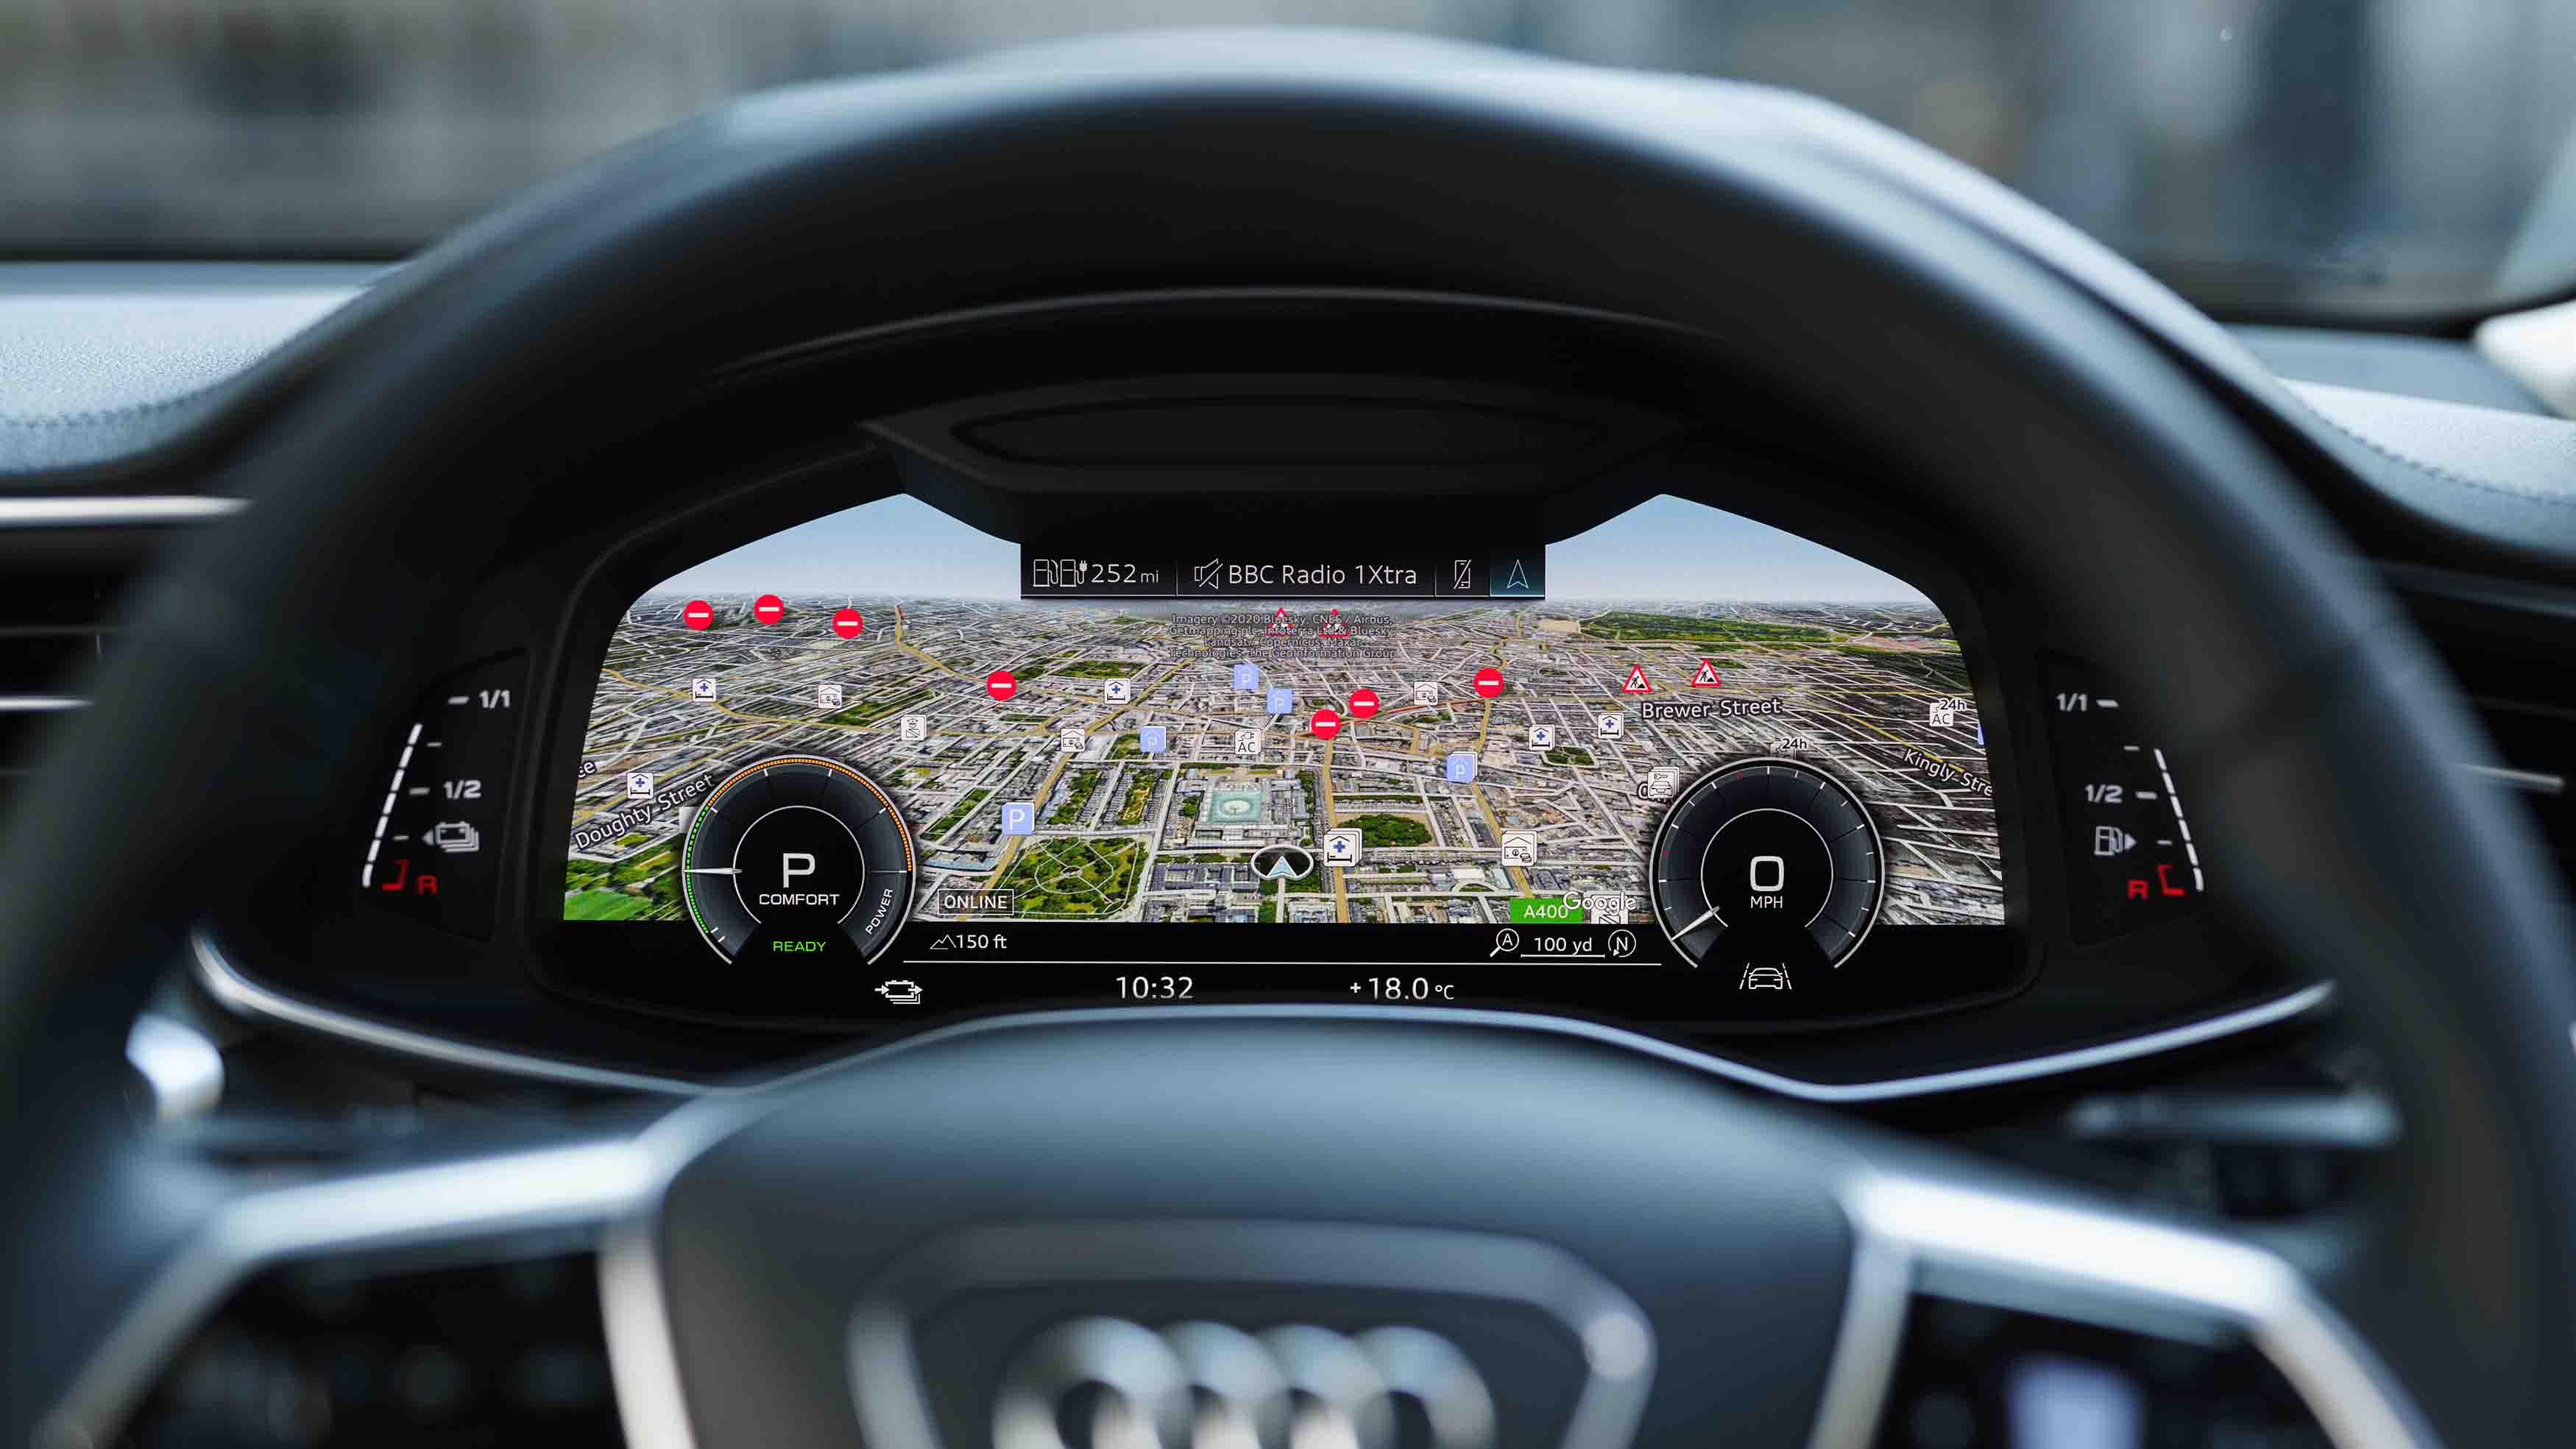 Audi A6 Virtual Cockpit dials showing full-width sat nav display